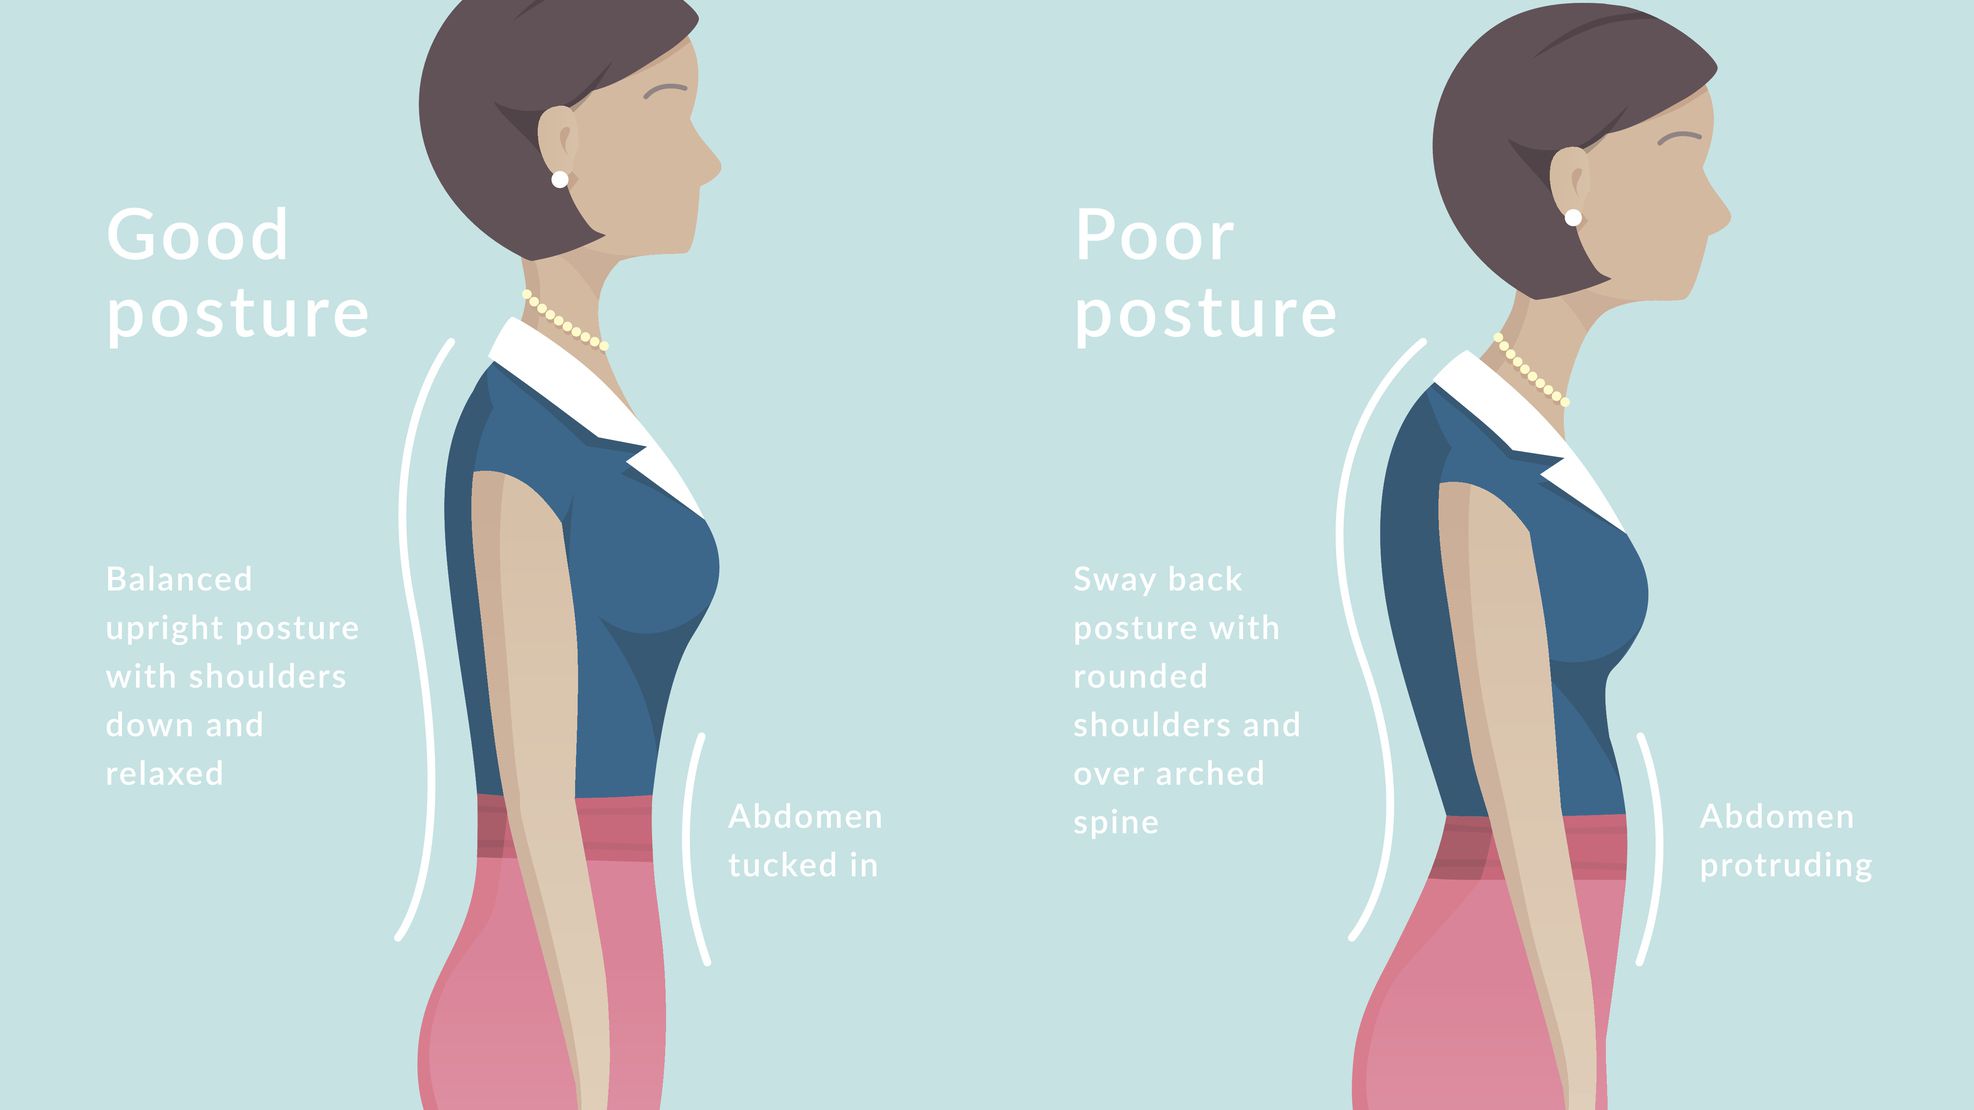 Definition of posture (left : good posture, right : poor posture)